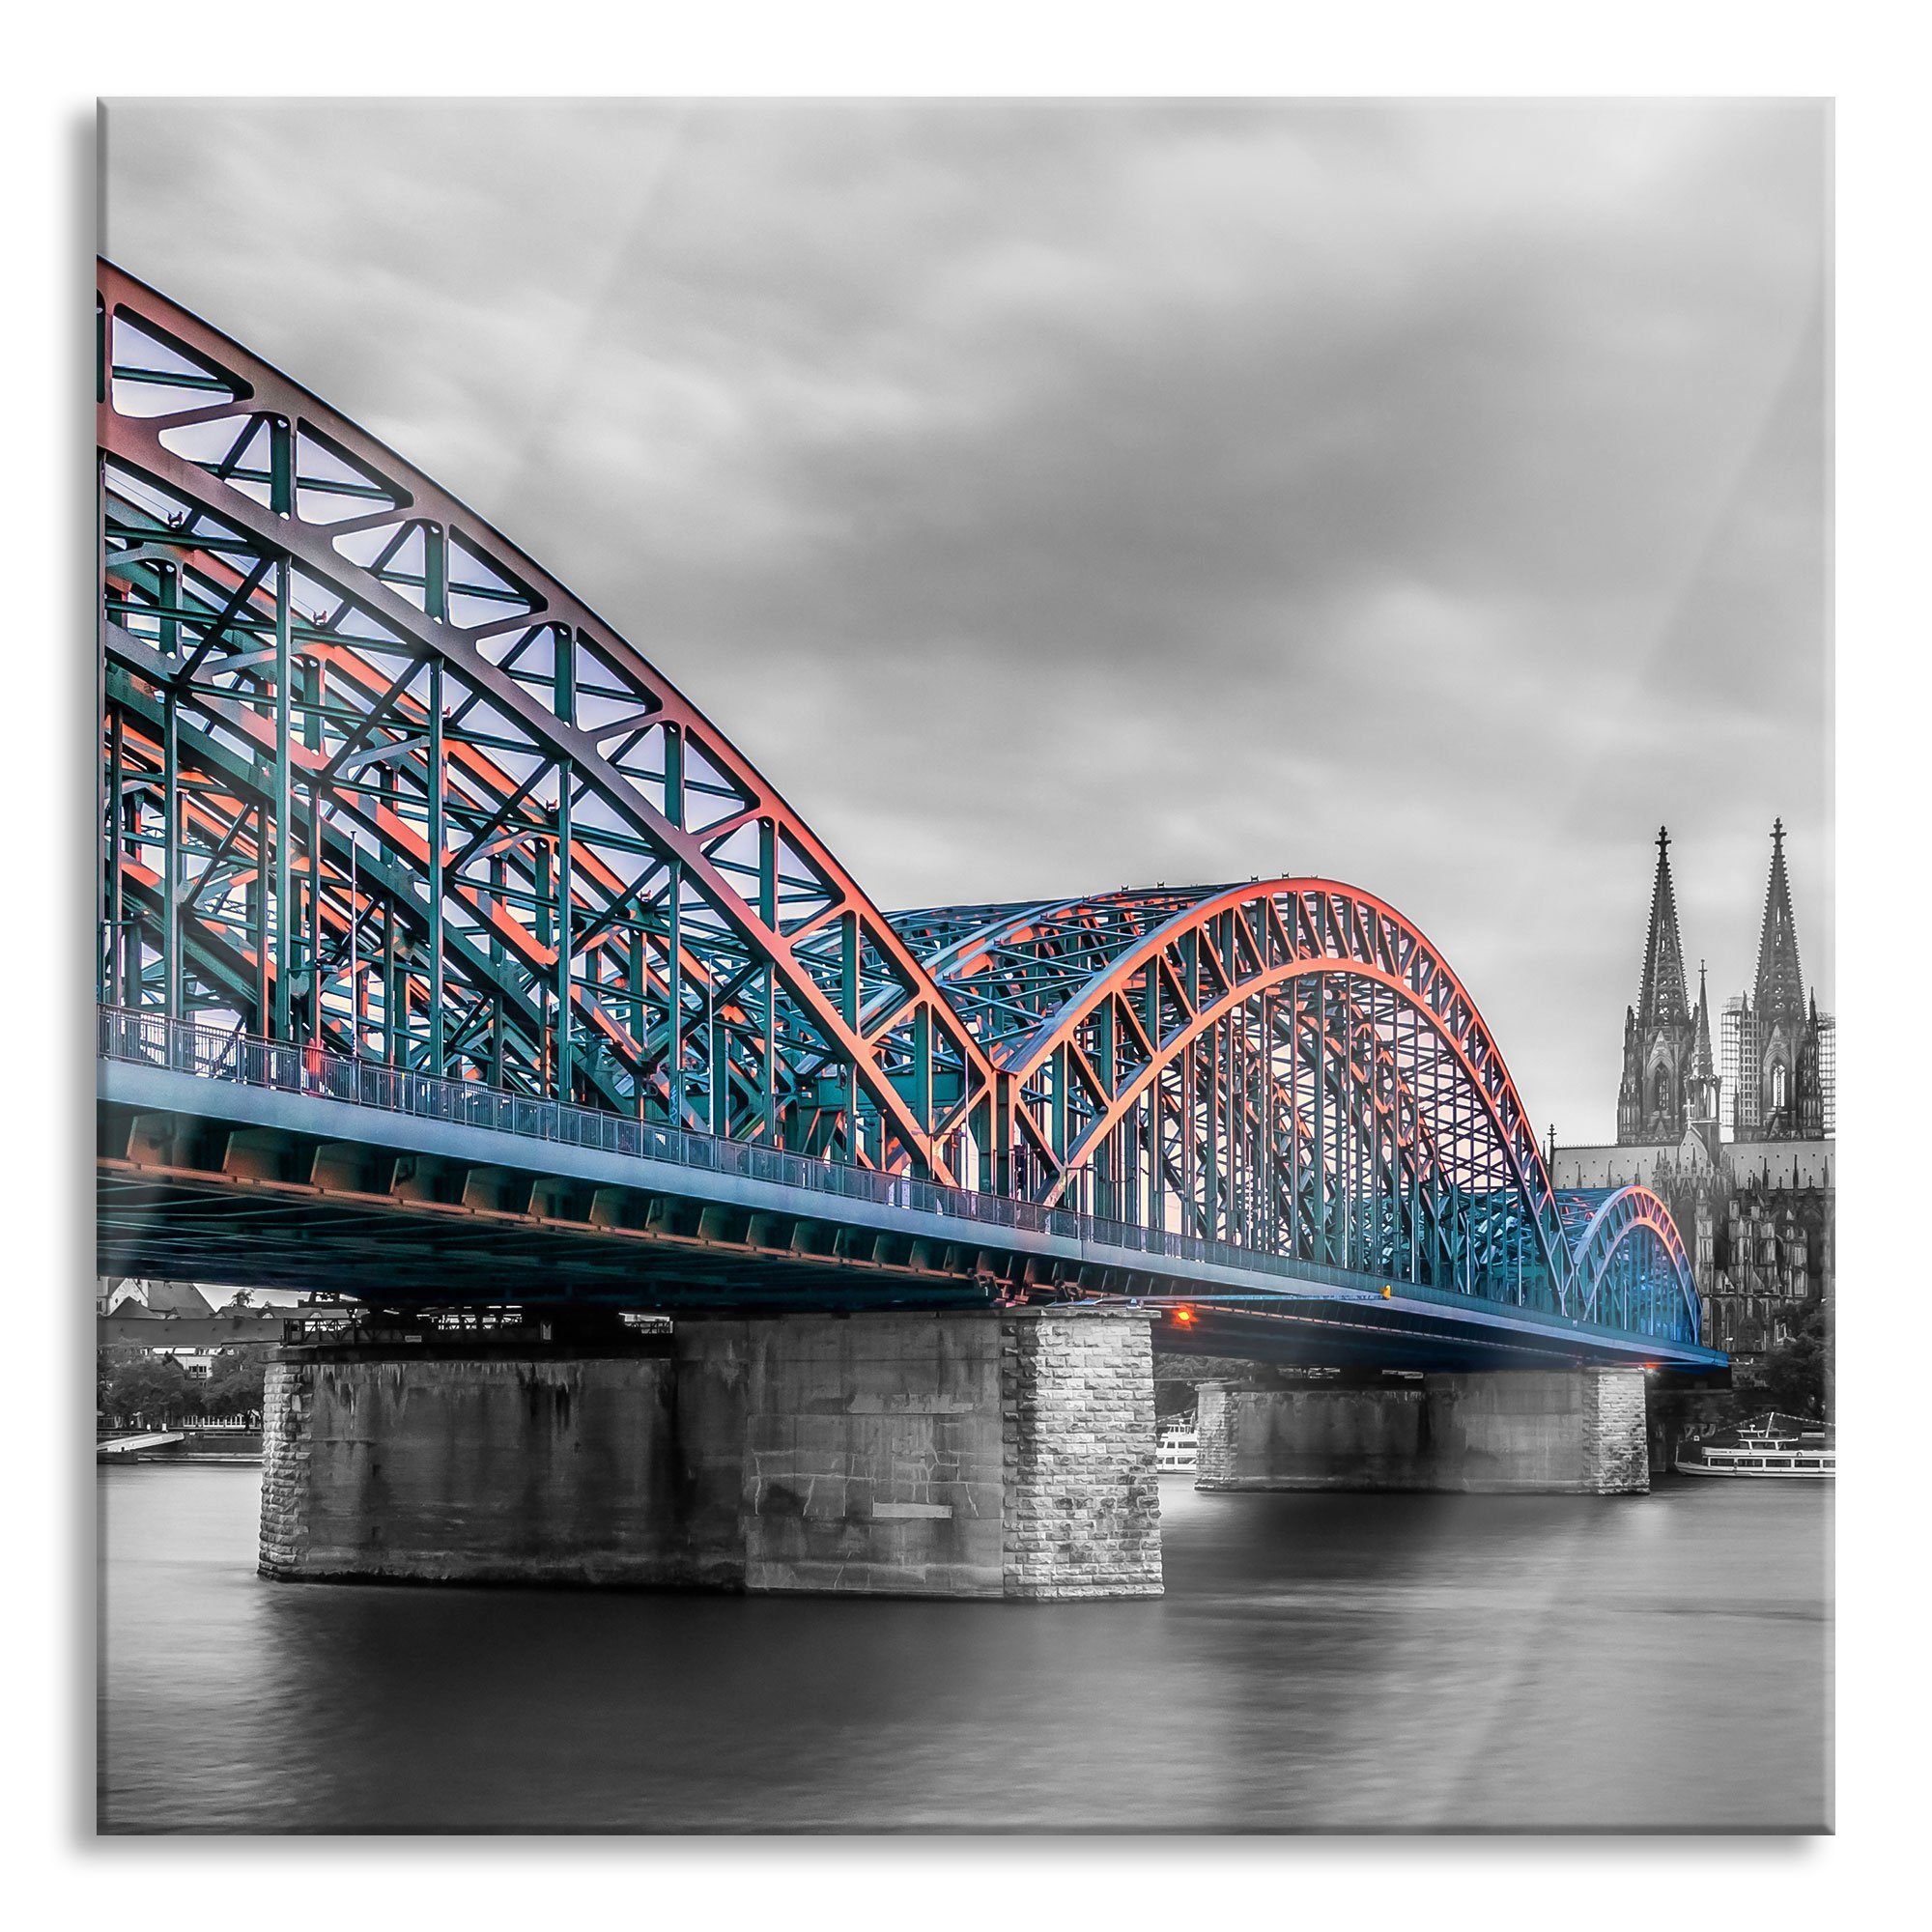 Pixxprint Glasbild Brücke Kölner Dom, Brücke Kölner Dom (1 St), Glasbild aus Echtglas, inkl. Aufhängungen und Abstandshalter